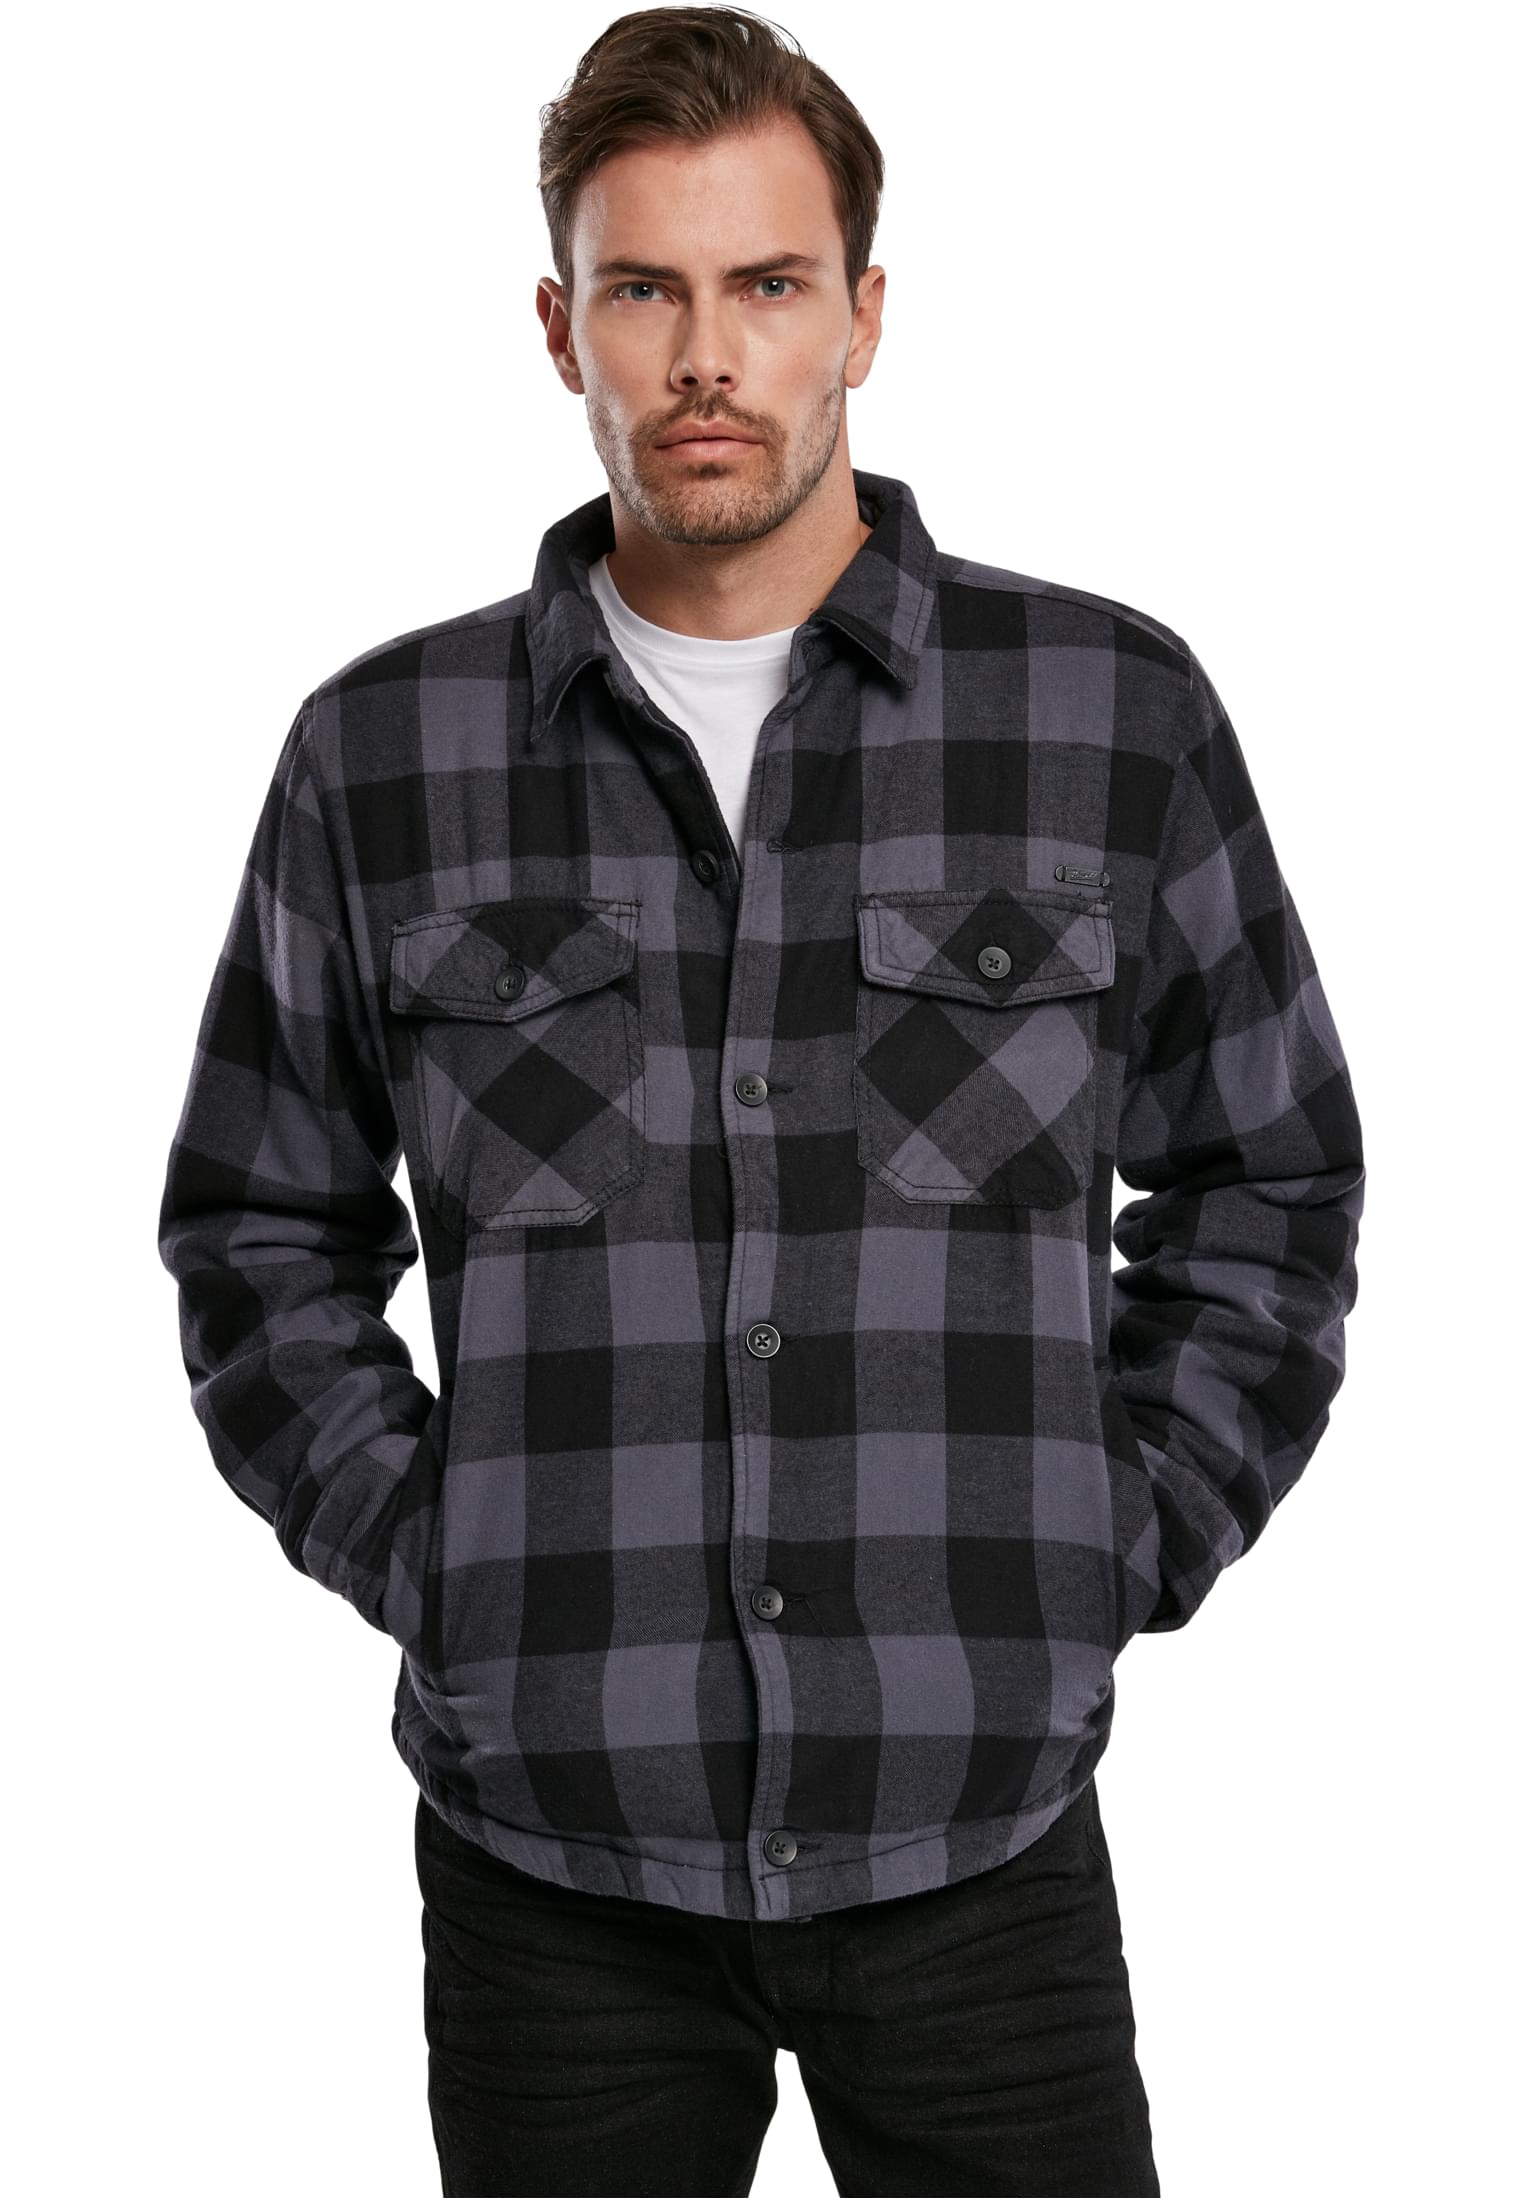 Jacken Lumberjacket in Farbe black/grey